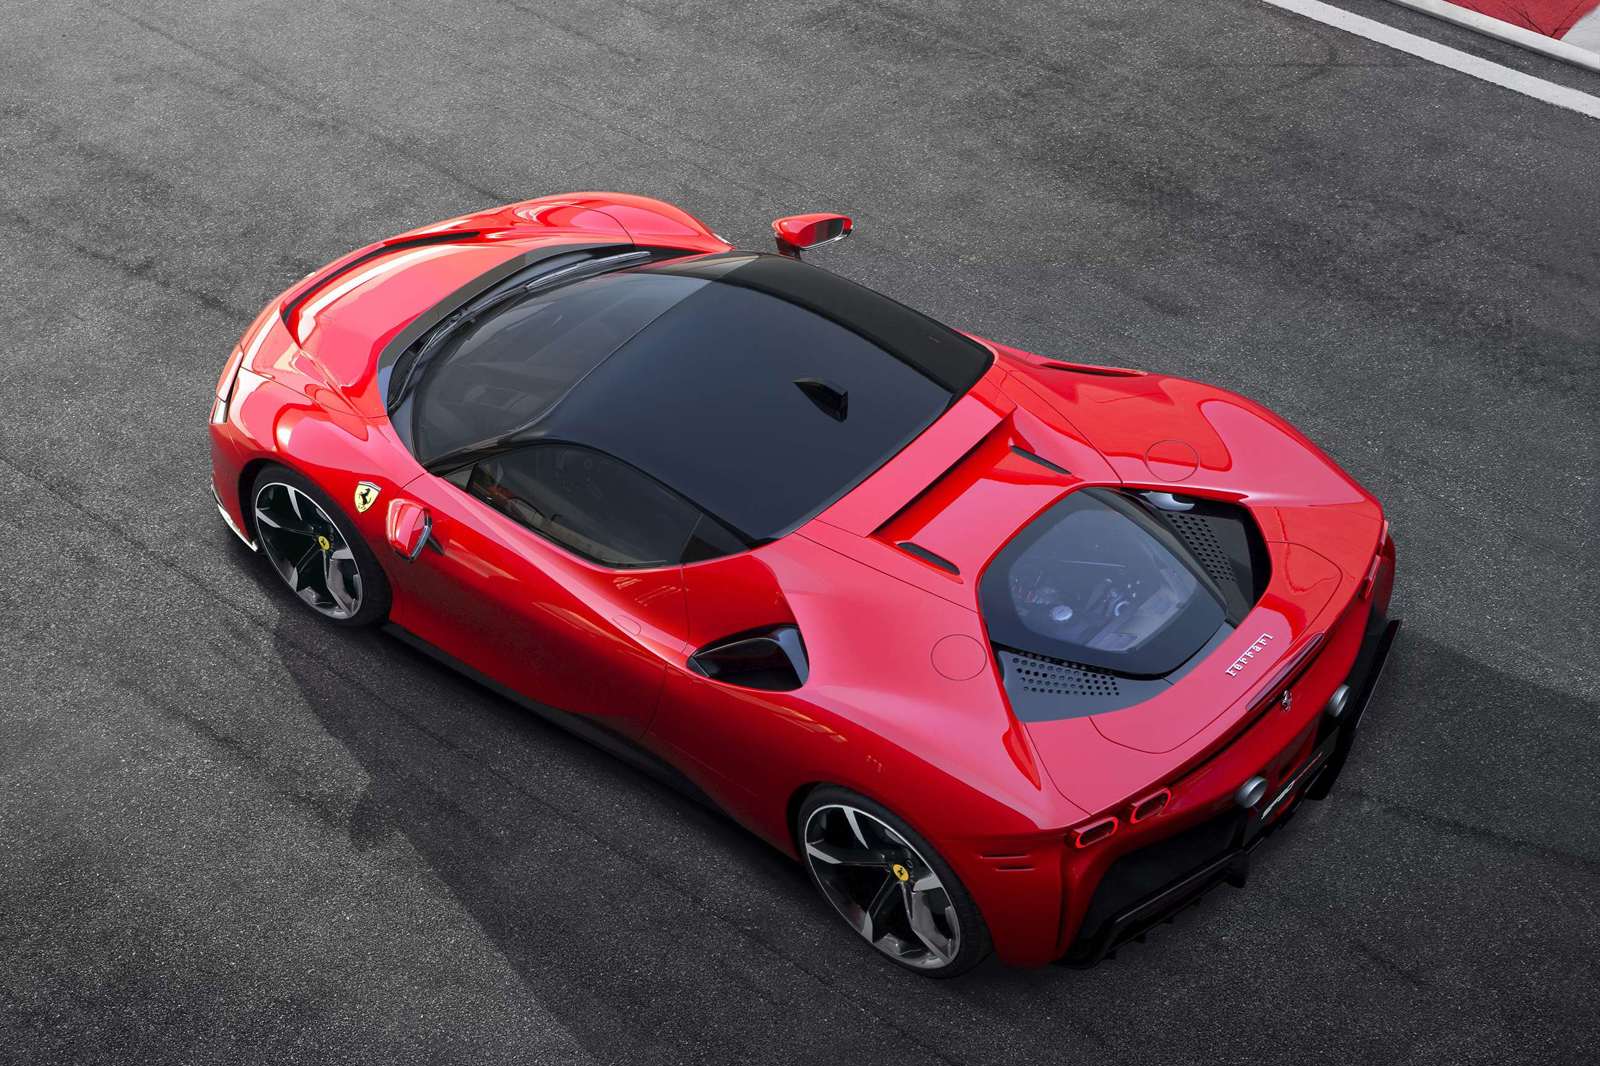 2021 Ferrari SF90 Stradale: What Makes It the Fastest Ferrari Road